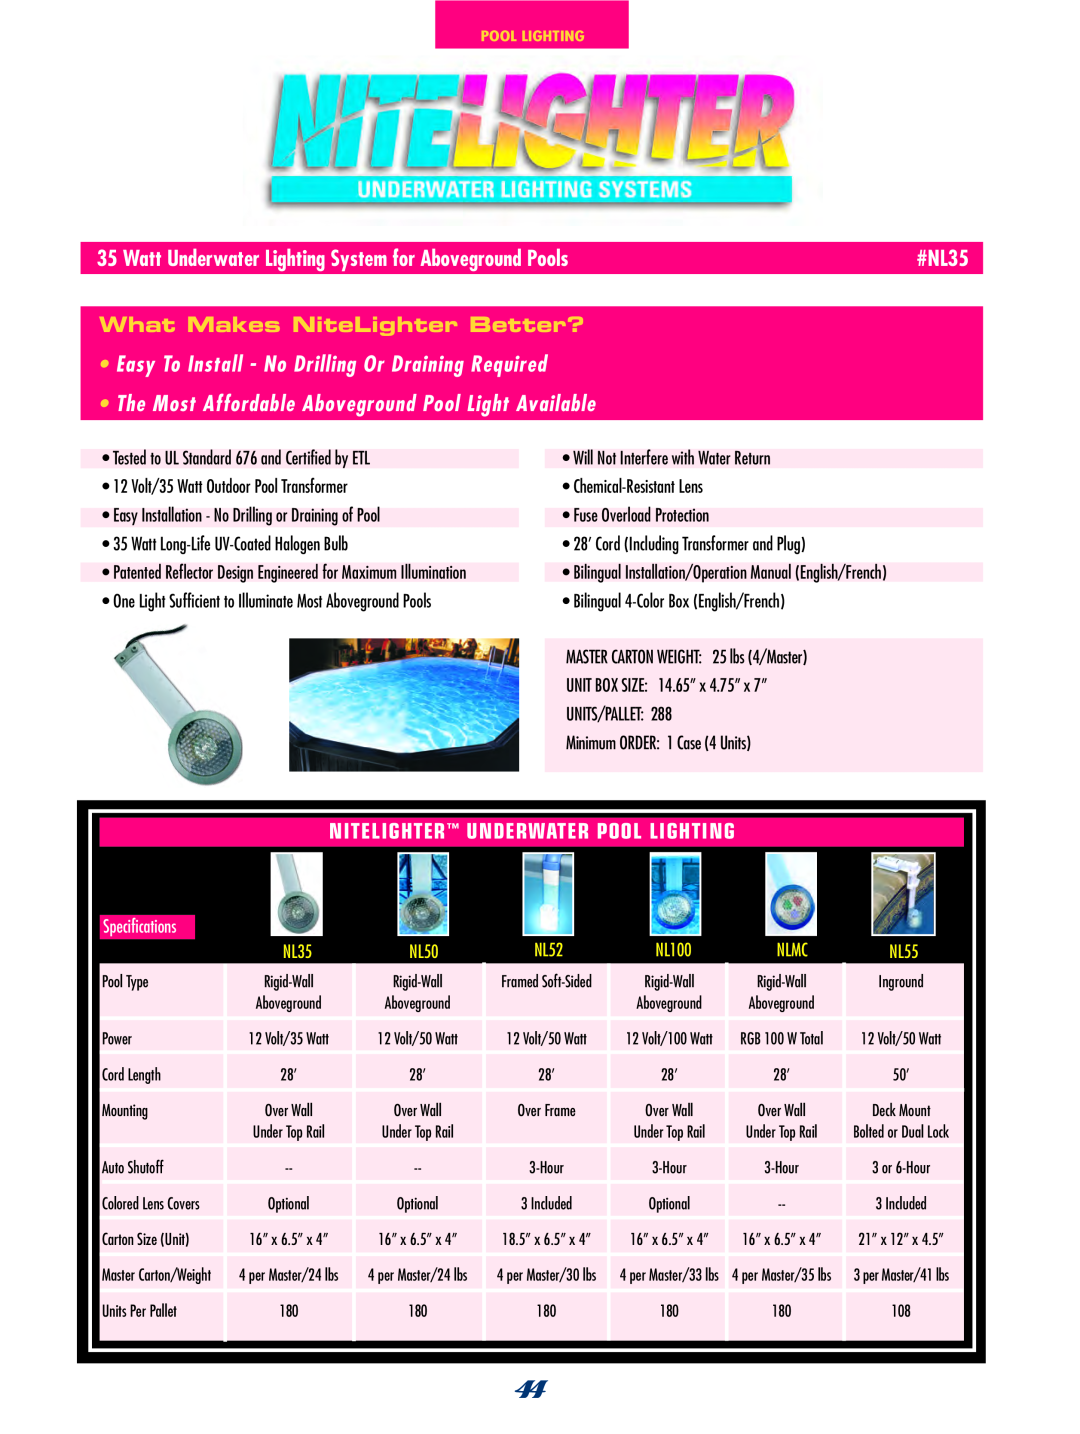 SmartPool Inc NC31 manual #NL35, What Makes NiteLighter Better?, Specifications, NL50, NL100, Nlmc, NL55 